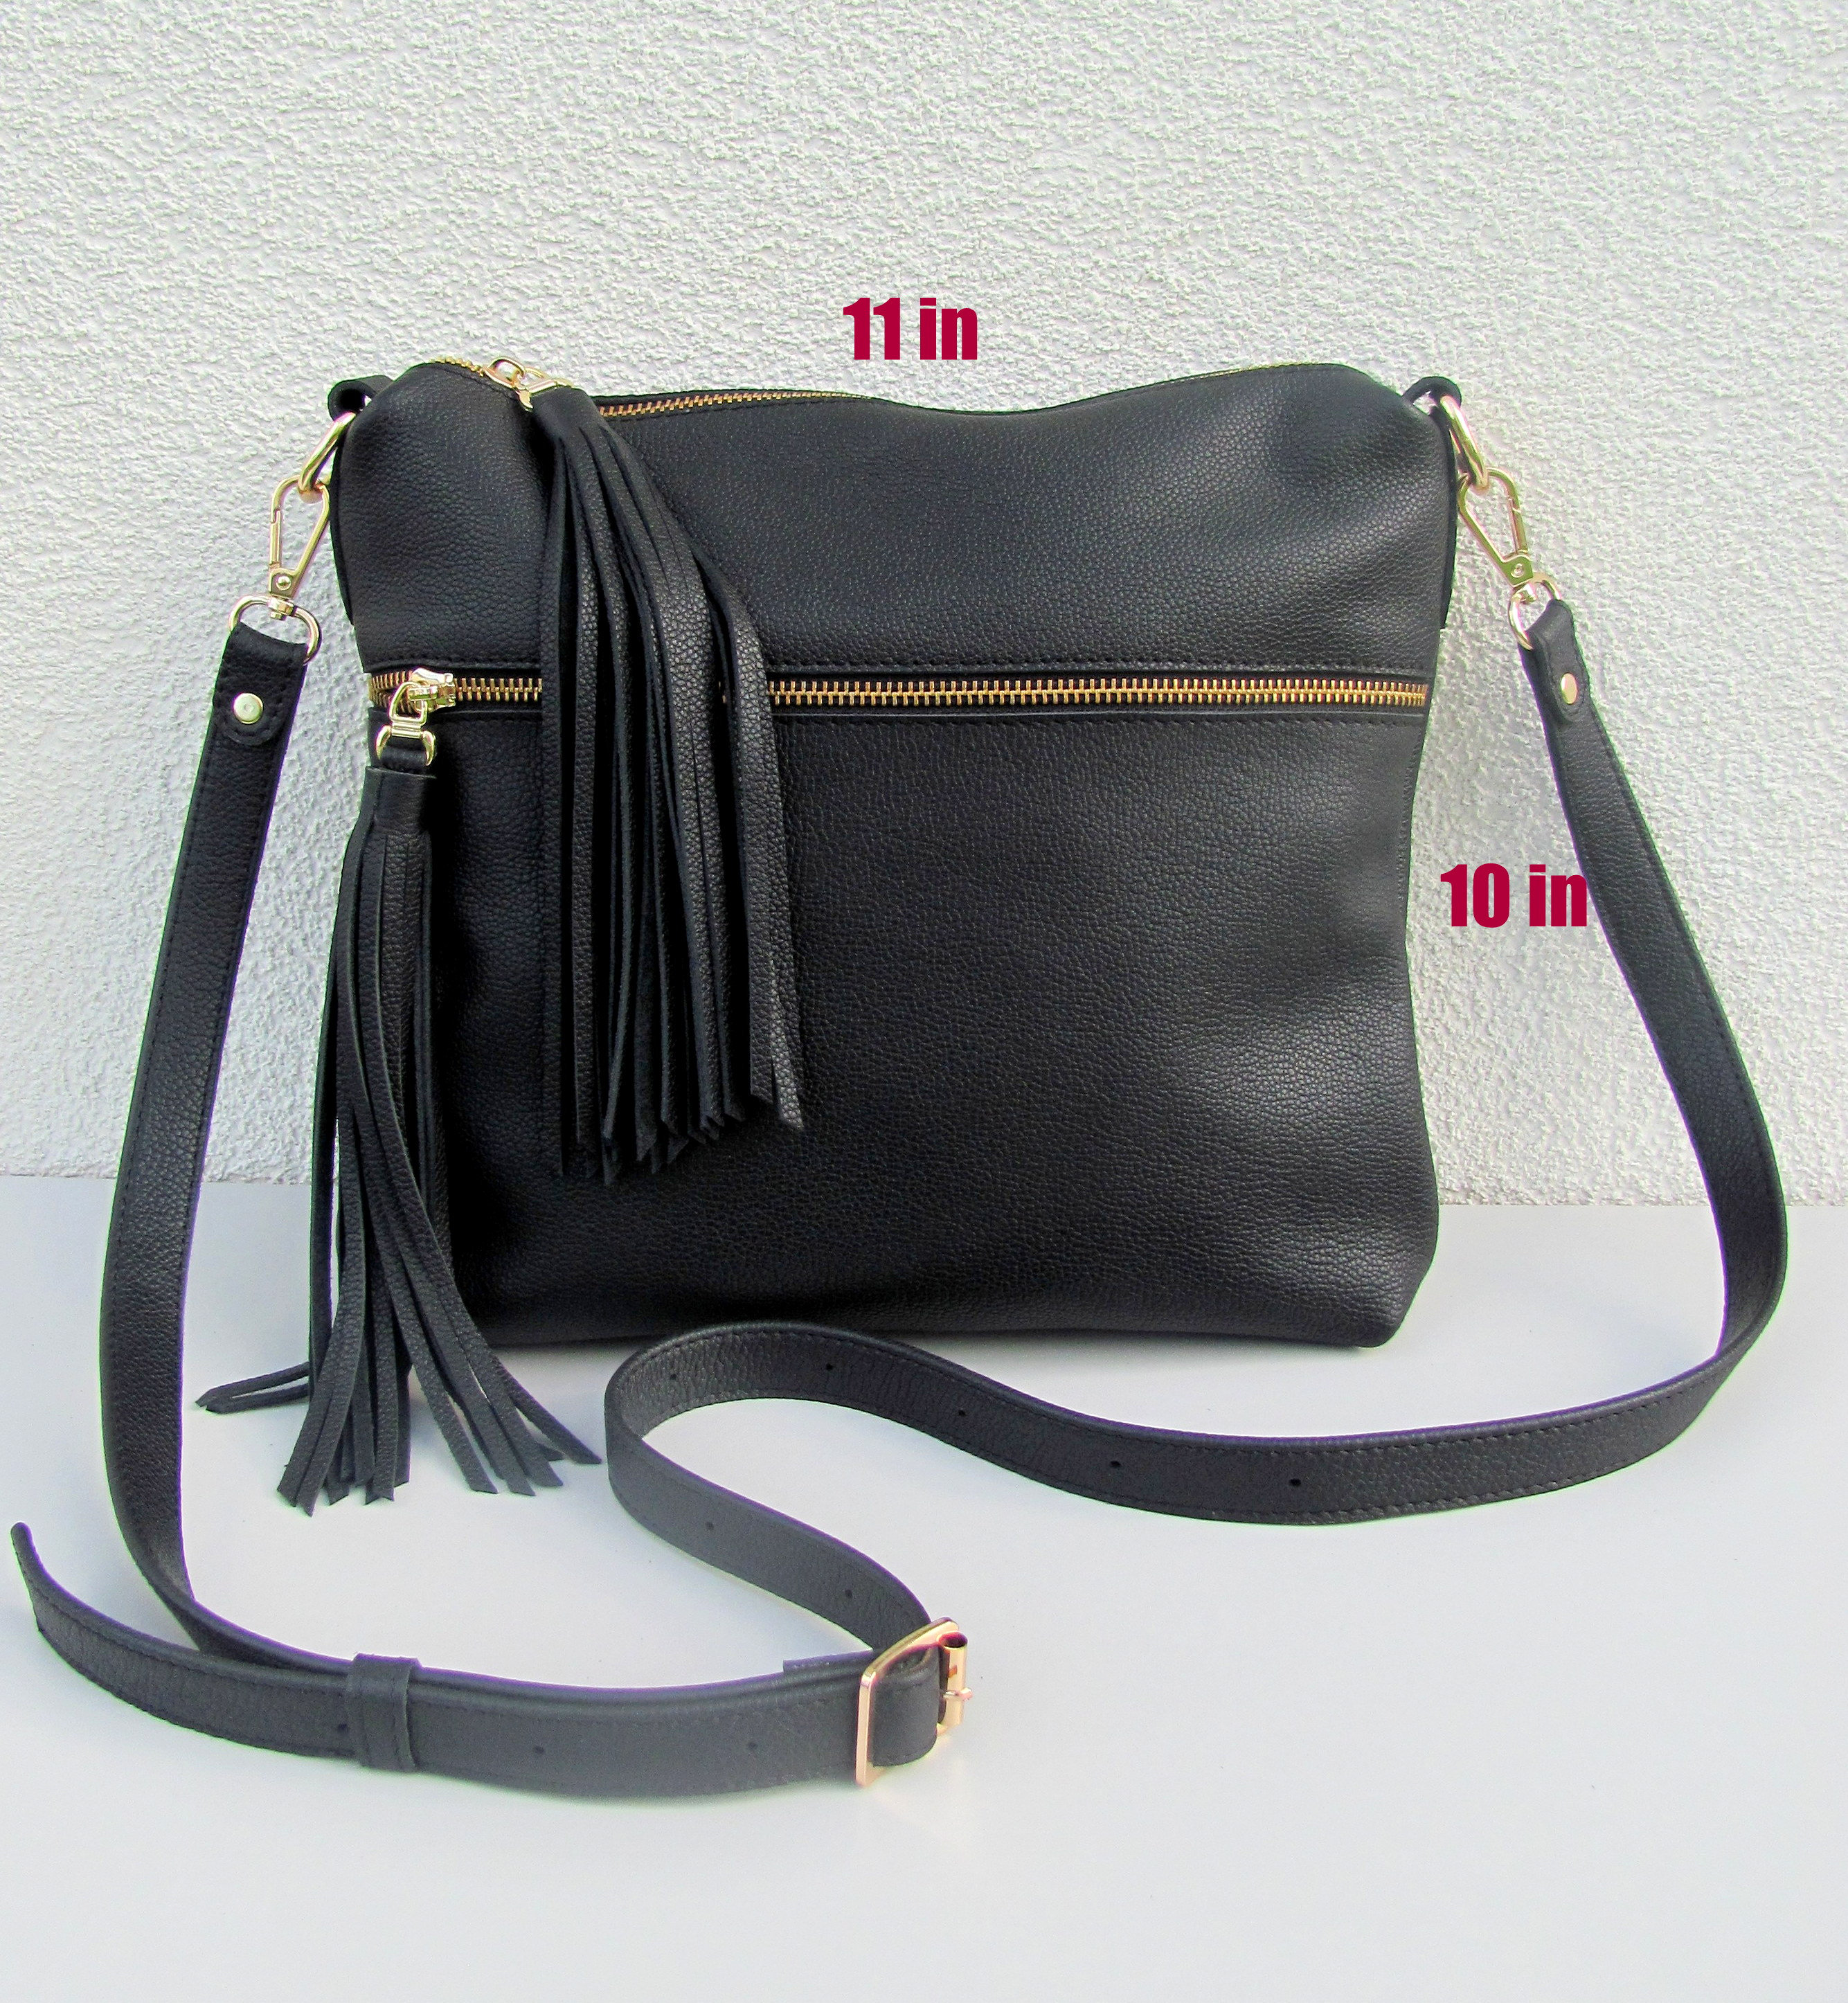 Buy Black Leather Crossbody Bag for Women Medium Cross Body Purse Casual  Shoulder Bag Online in India - Etsy